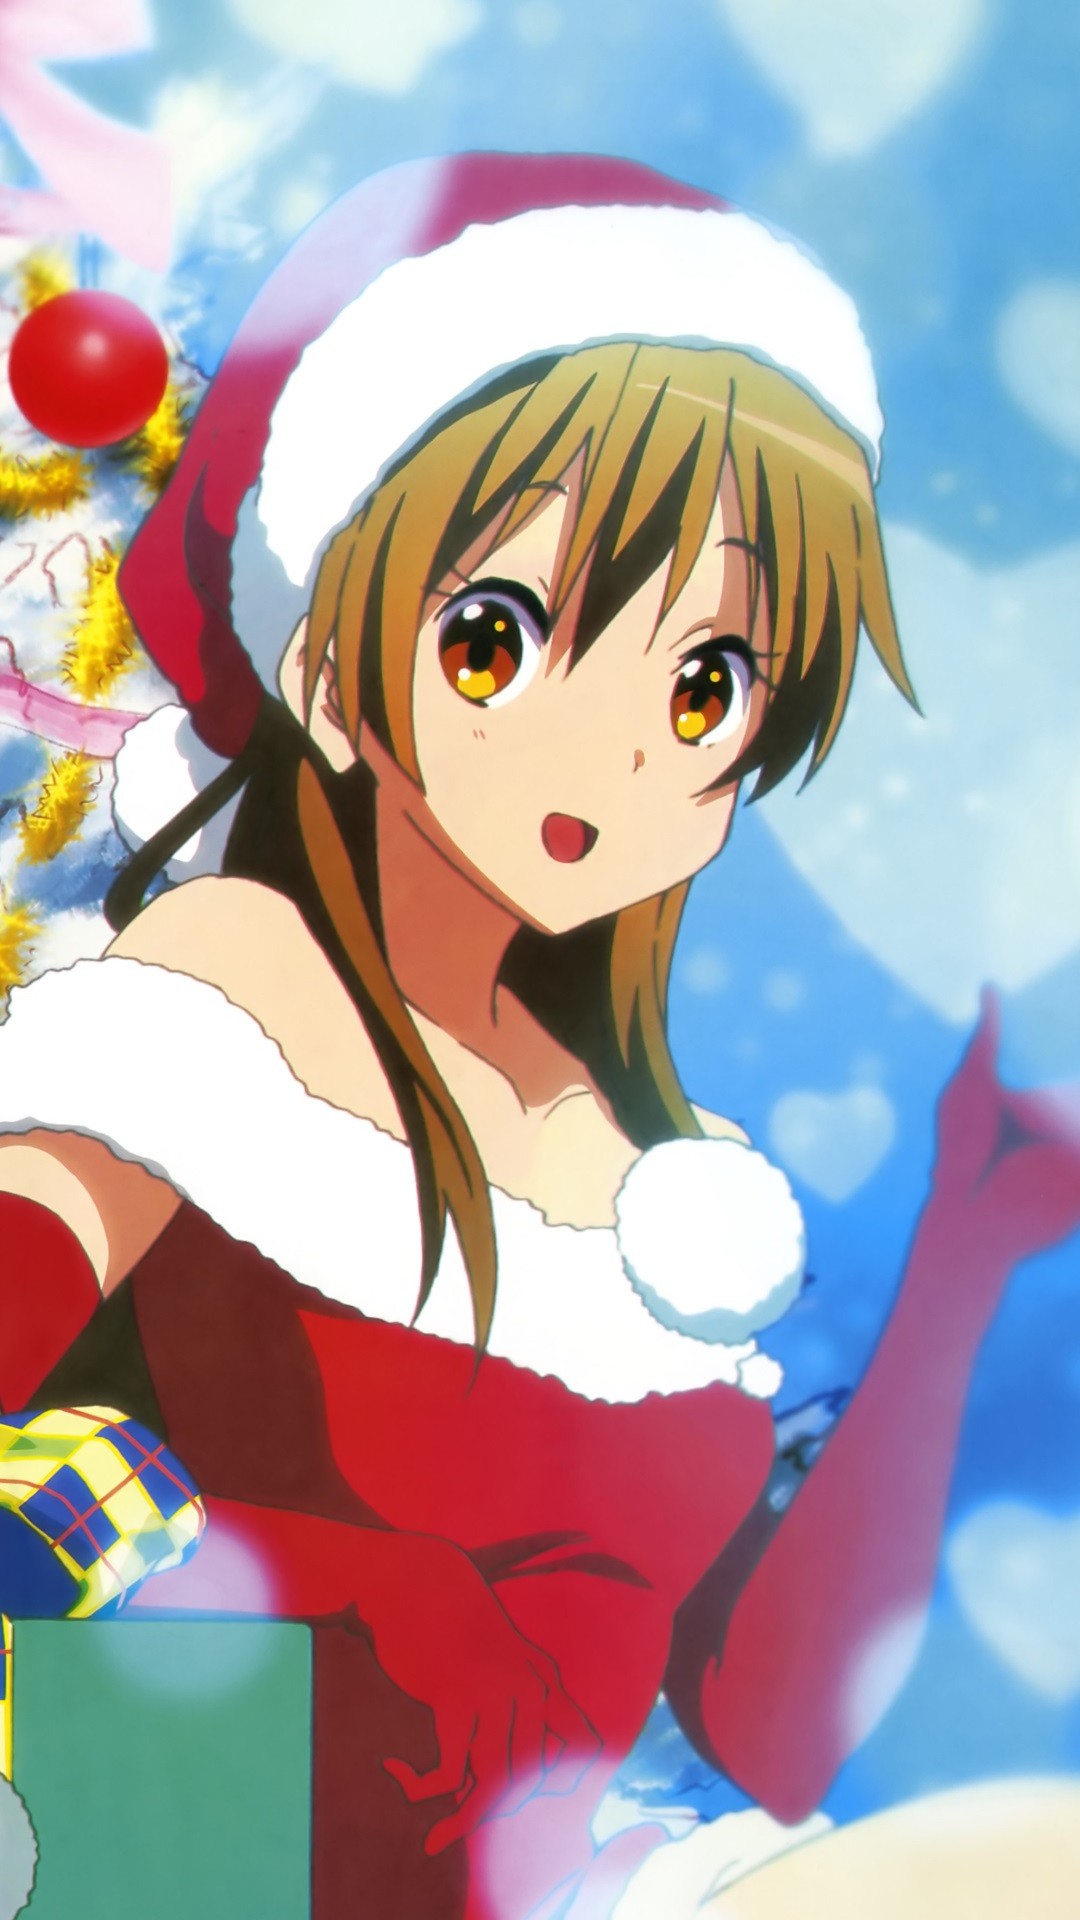 1080x1920 Free Wallpapers Christmas Anime Girls in Santa Dress Anime Â· Ipad Air ...